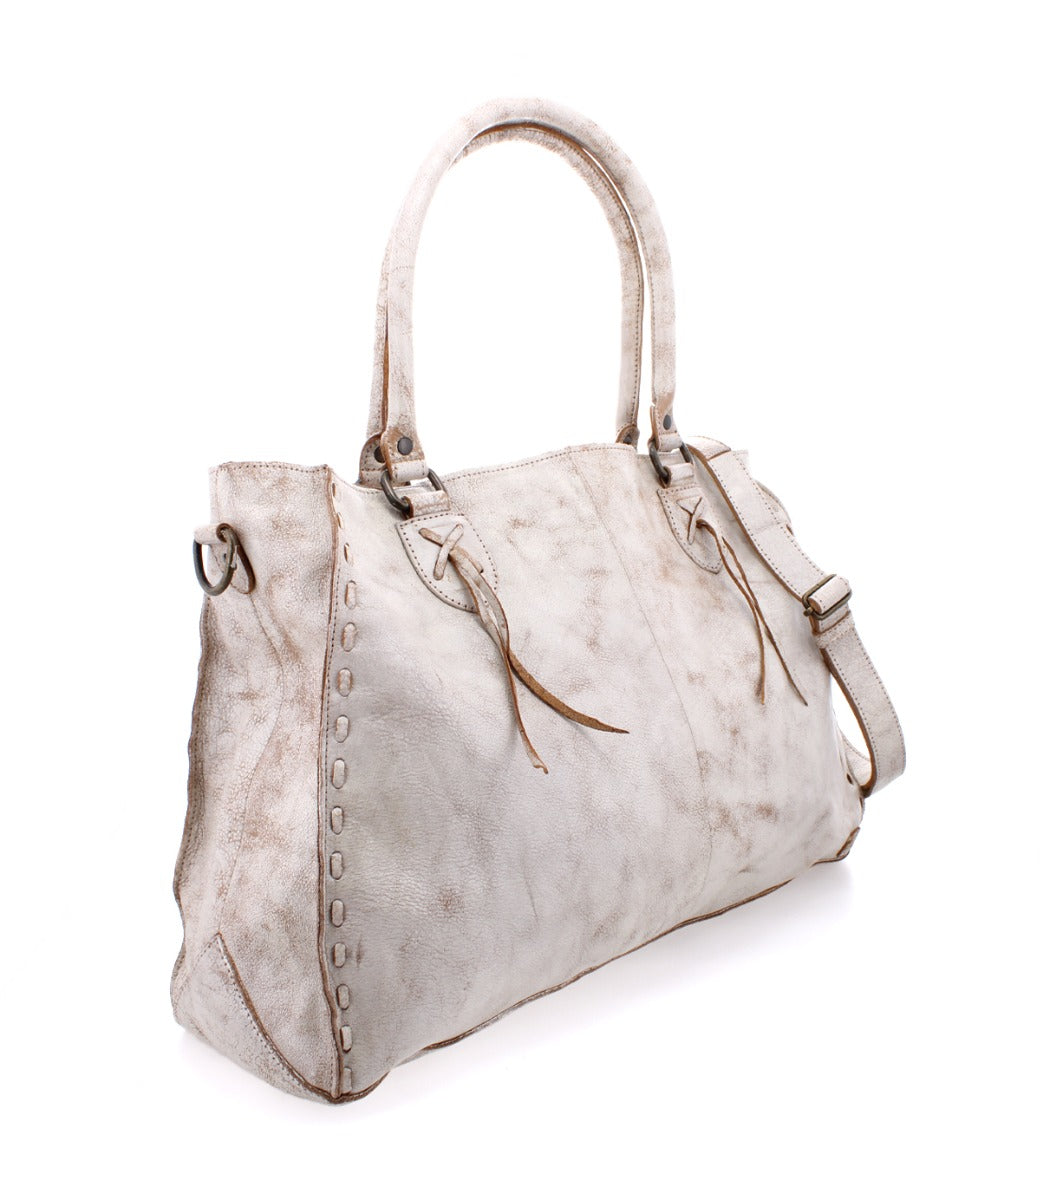 A white Rockaway handbag with studs on it by Bed Stu.